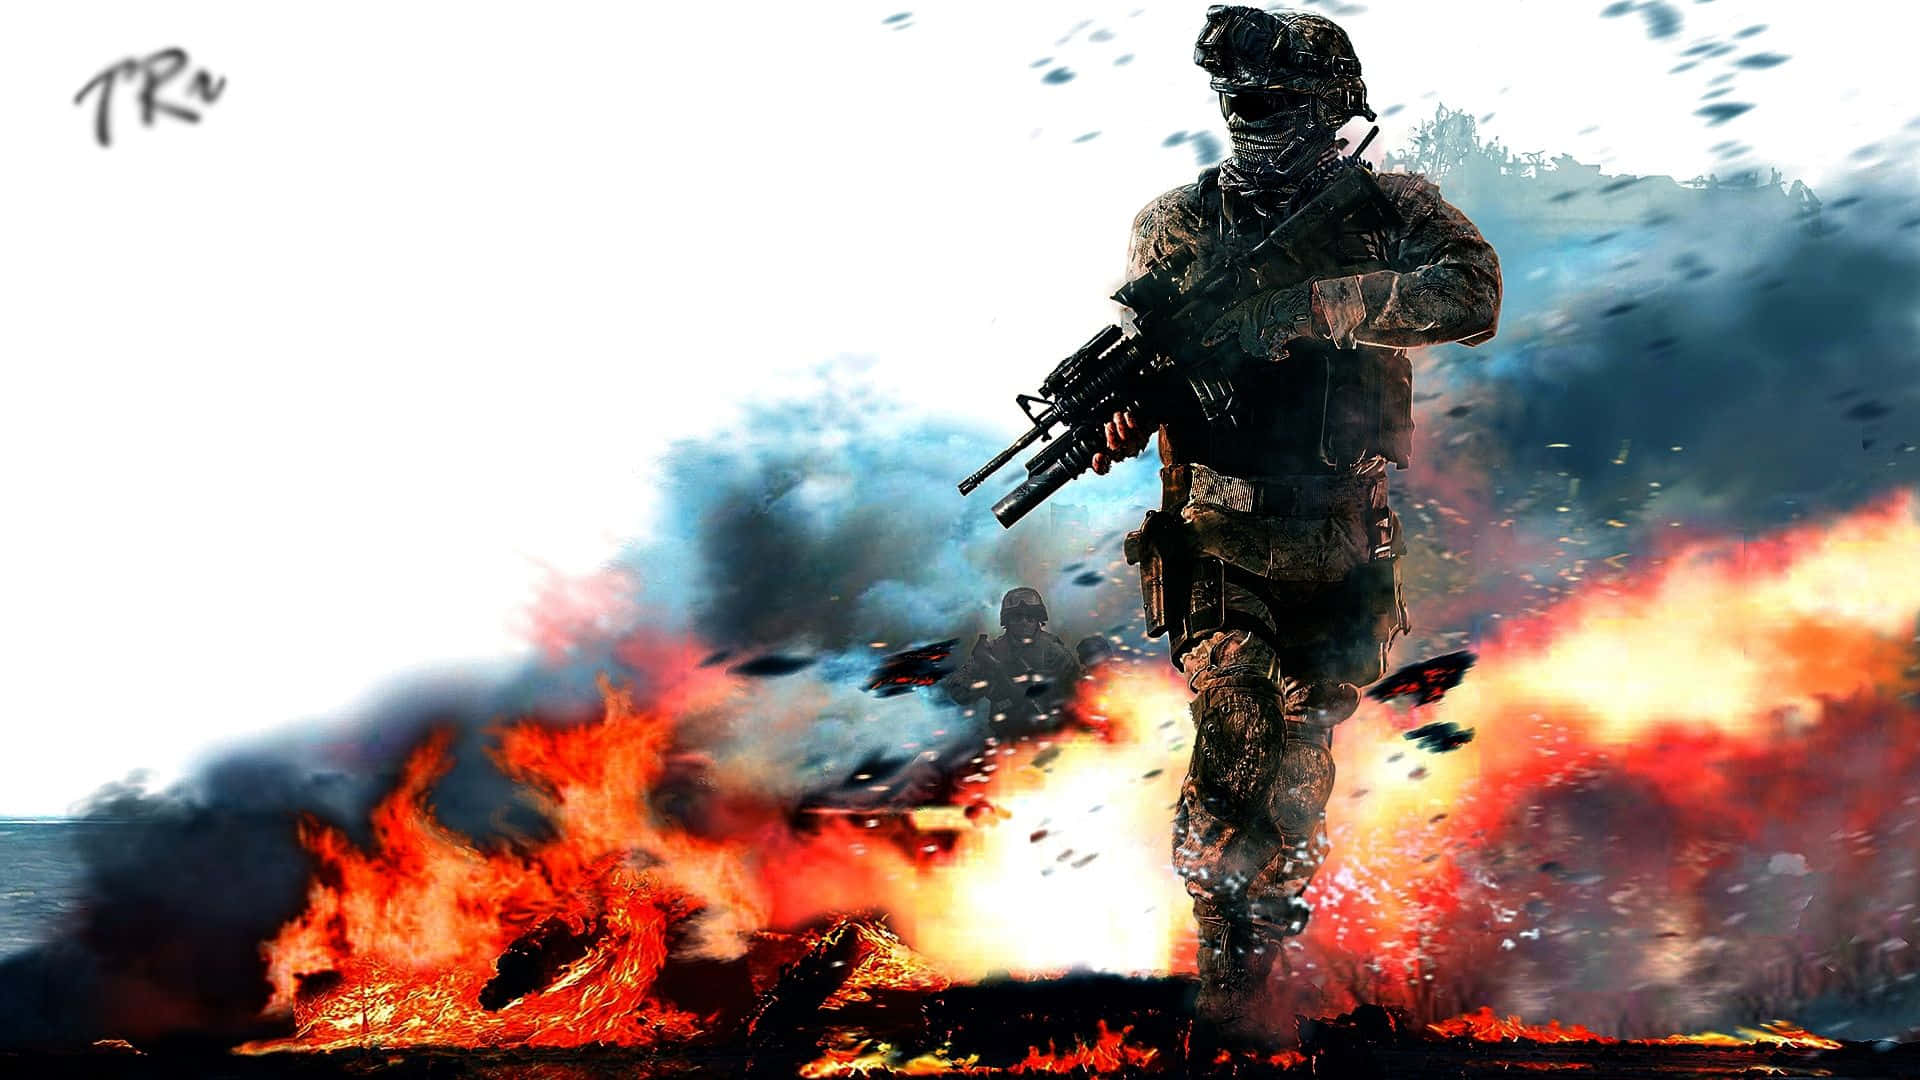 Intense Call of Duty Battle Scene in Action Wallpaper